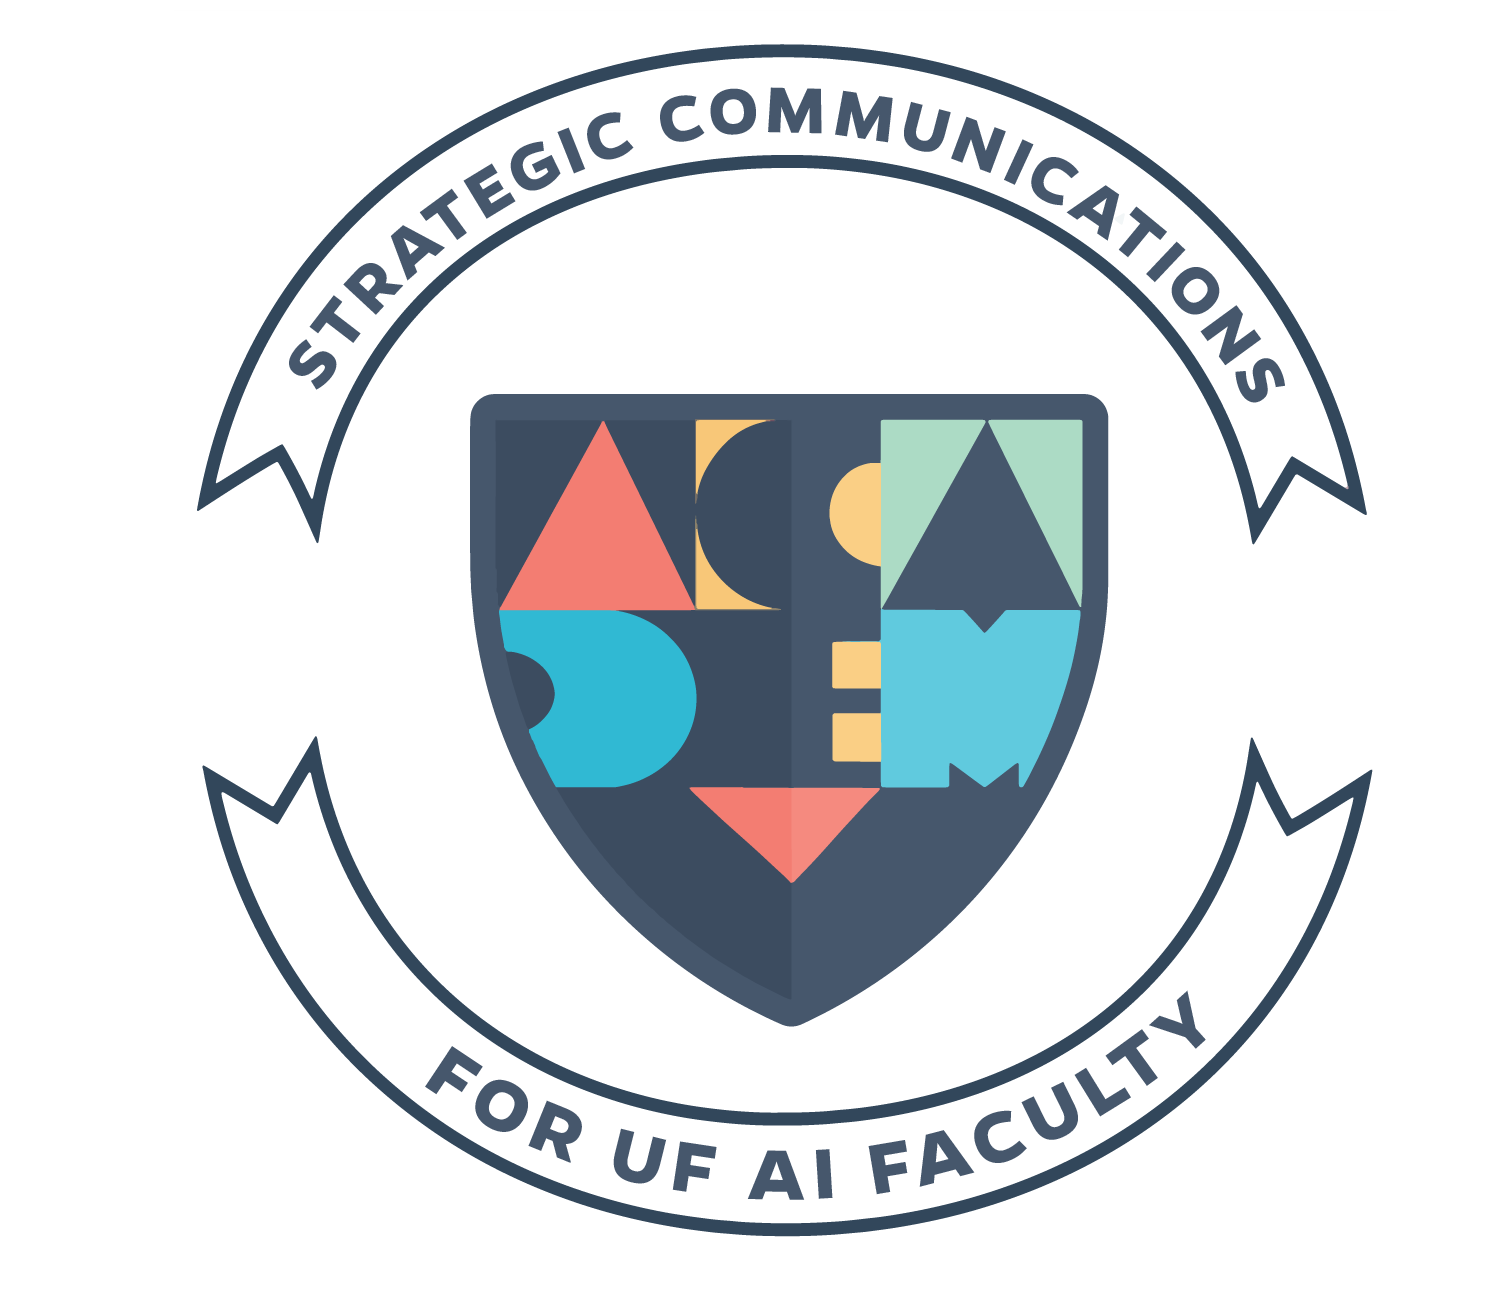 Word art logo for Strategic Communications academy